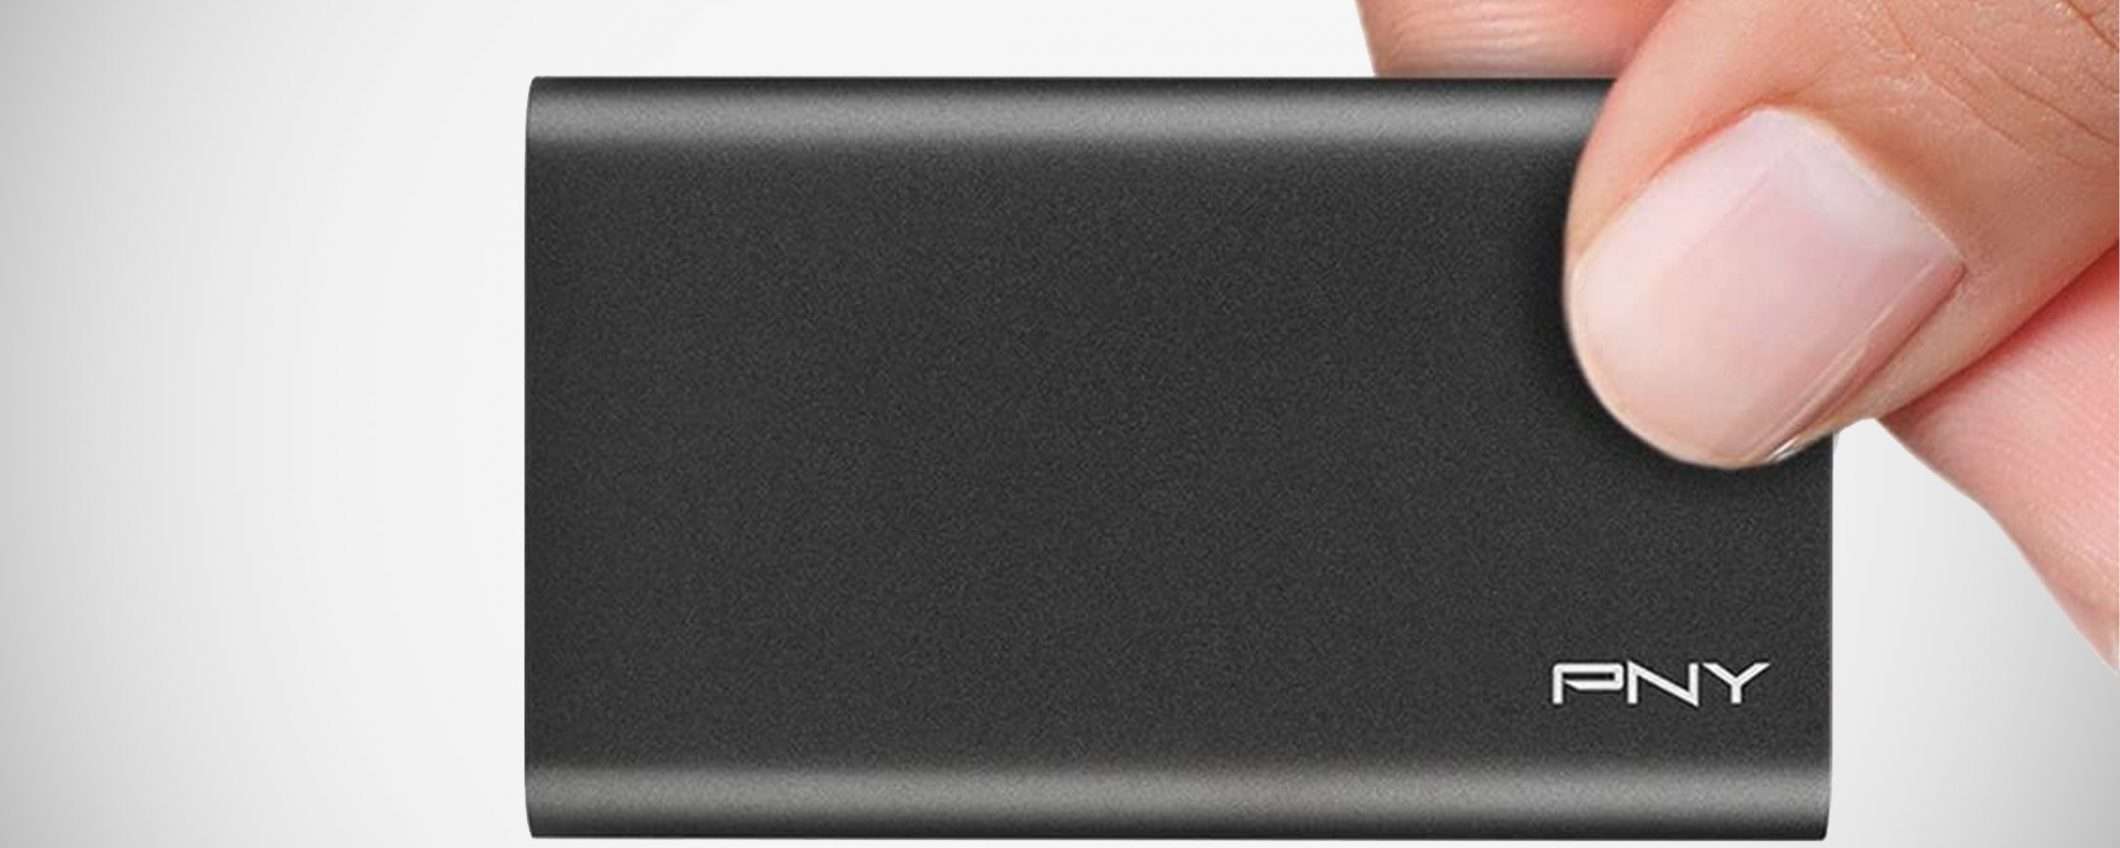 Offerte Amazon: SSD portatile PNY 240 GB a € 39,99